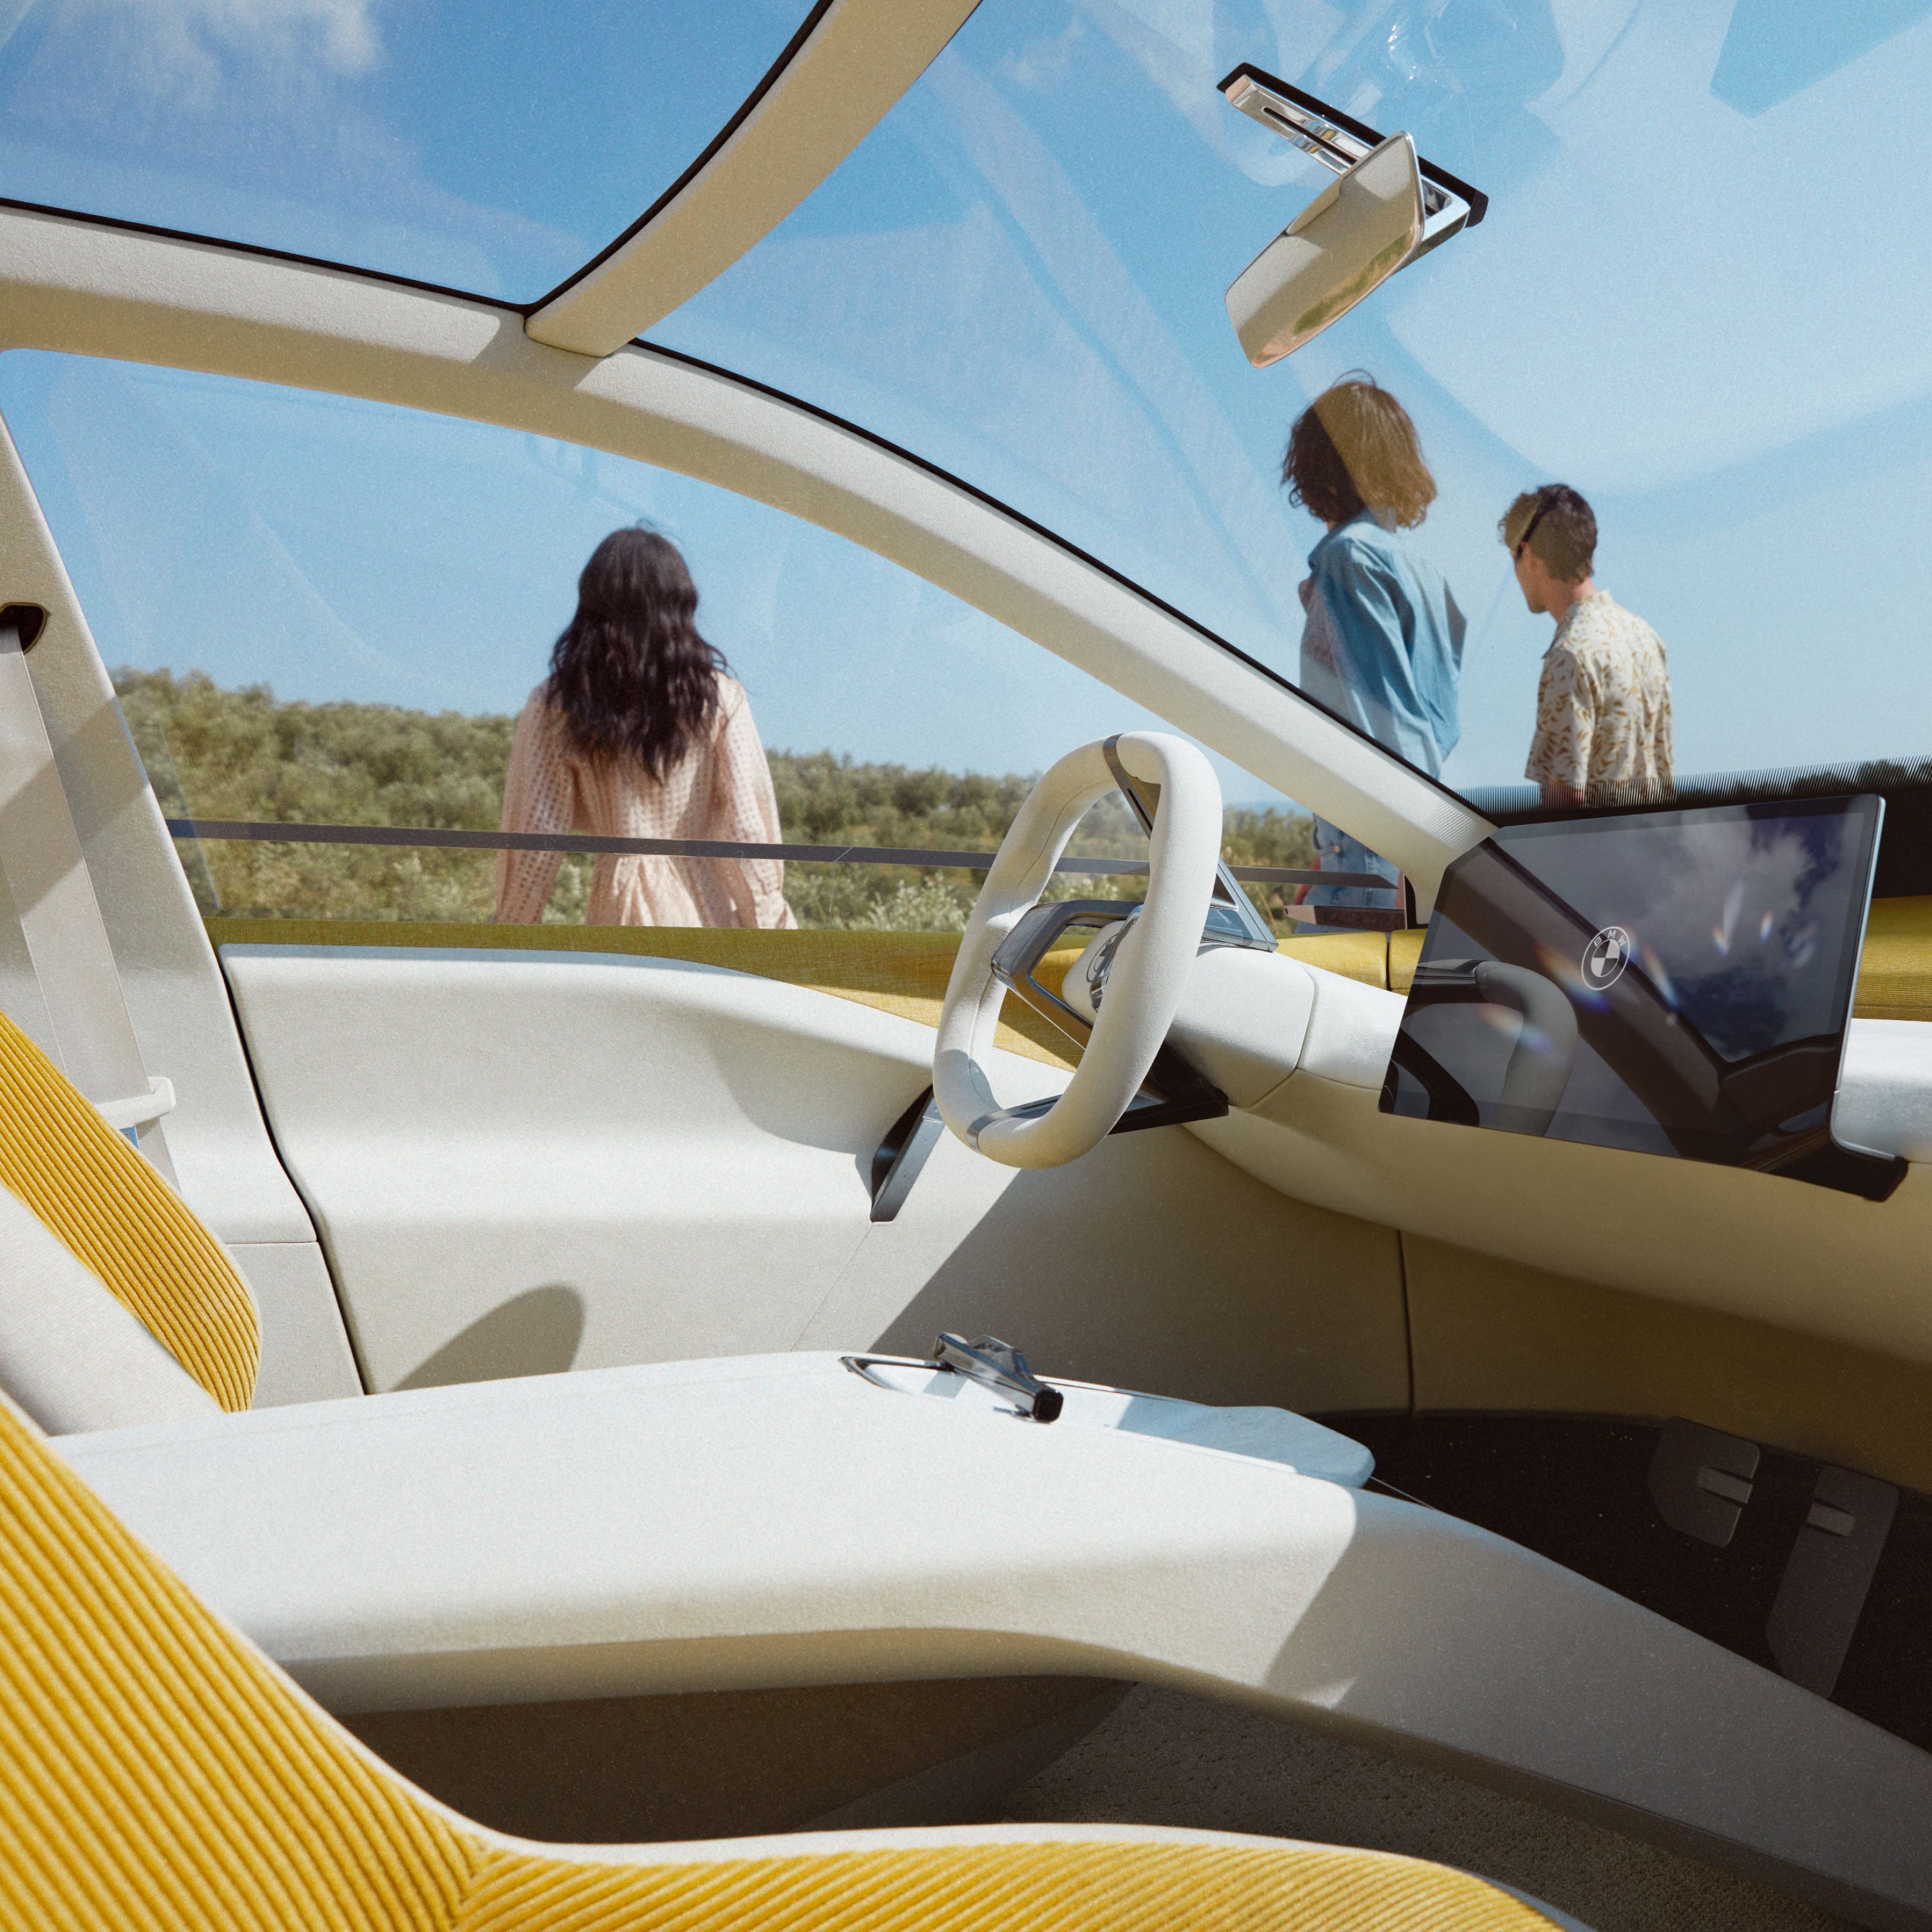 2023 BMW 비전 뉴 클래스 컨셉카 Interieur BMW 파노라믹 비전 디스플레이 BMW iDrive